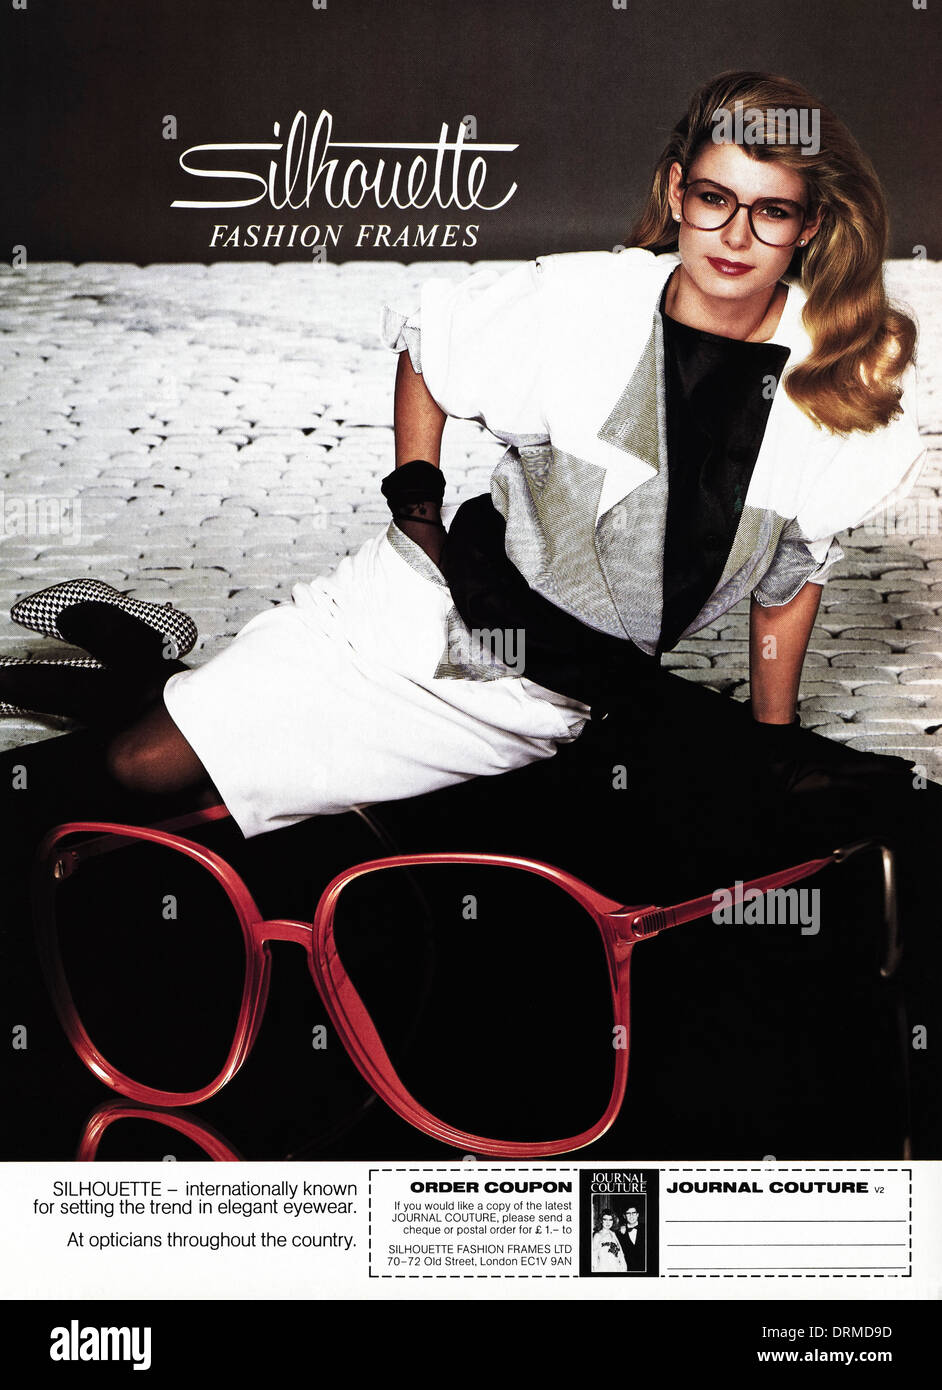 1980s fashion magazine advertisement advertising SILHOUETTE FASHION FRAMES  eyewear, advert circa 1983 Stock Photo - Alamy